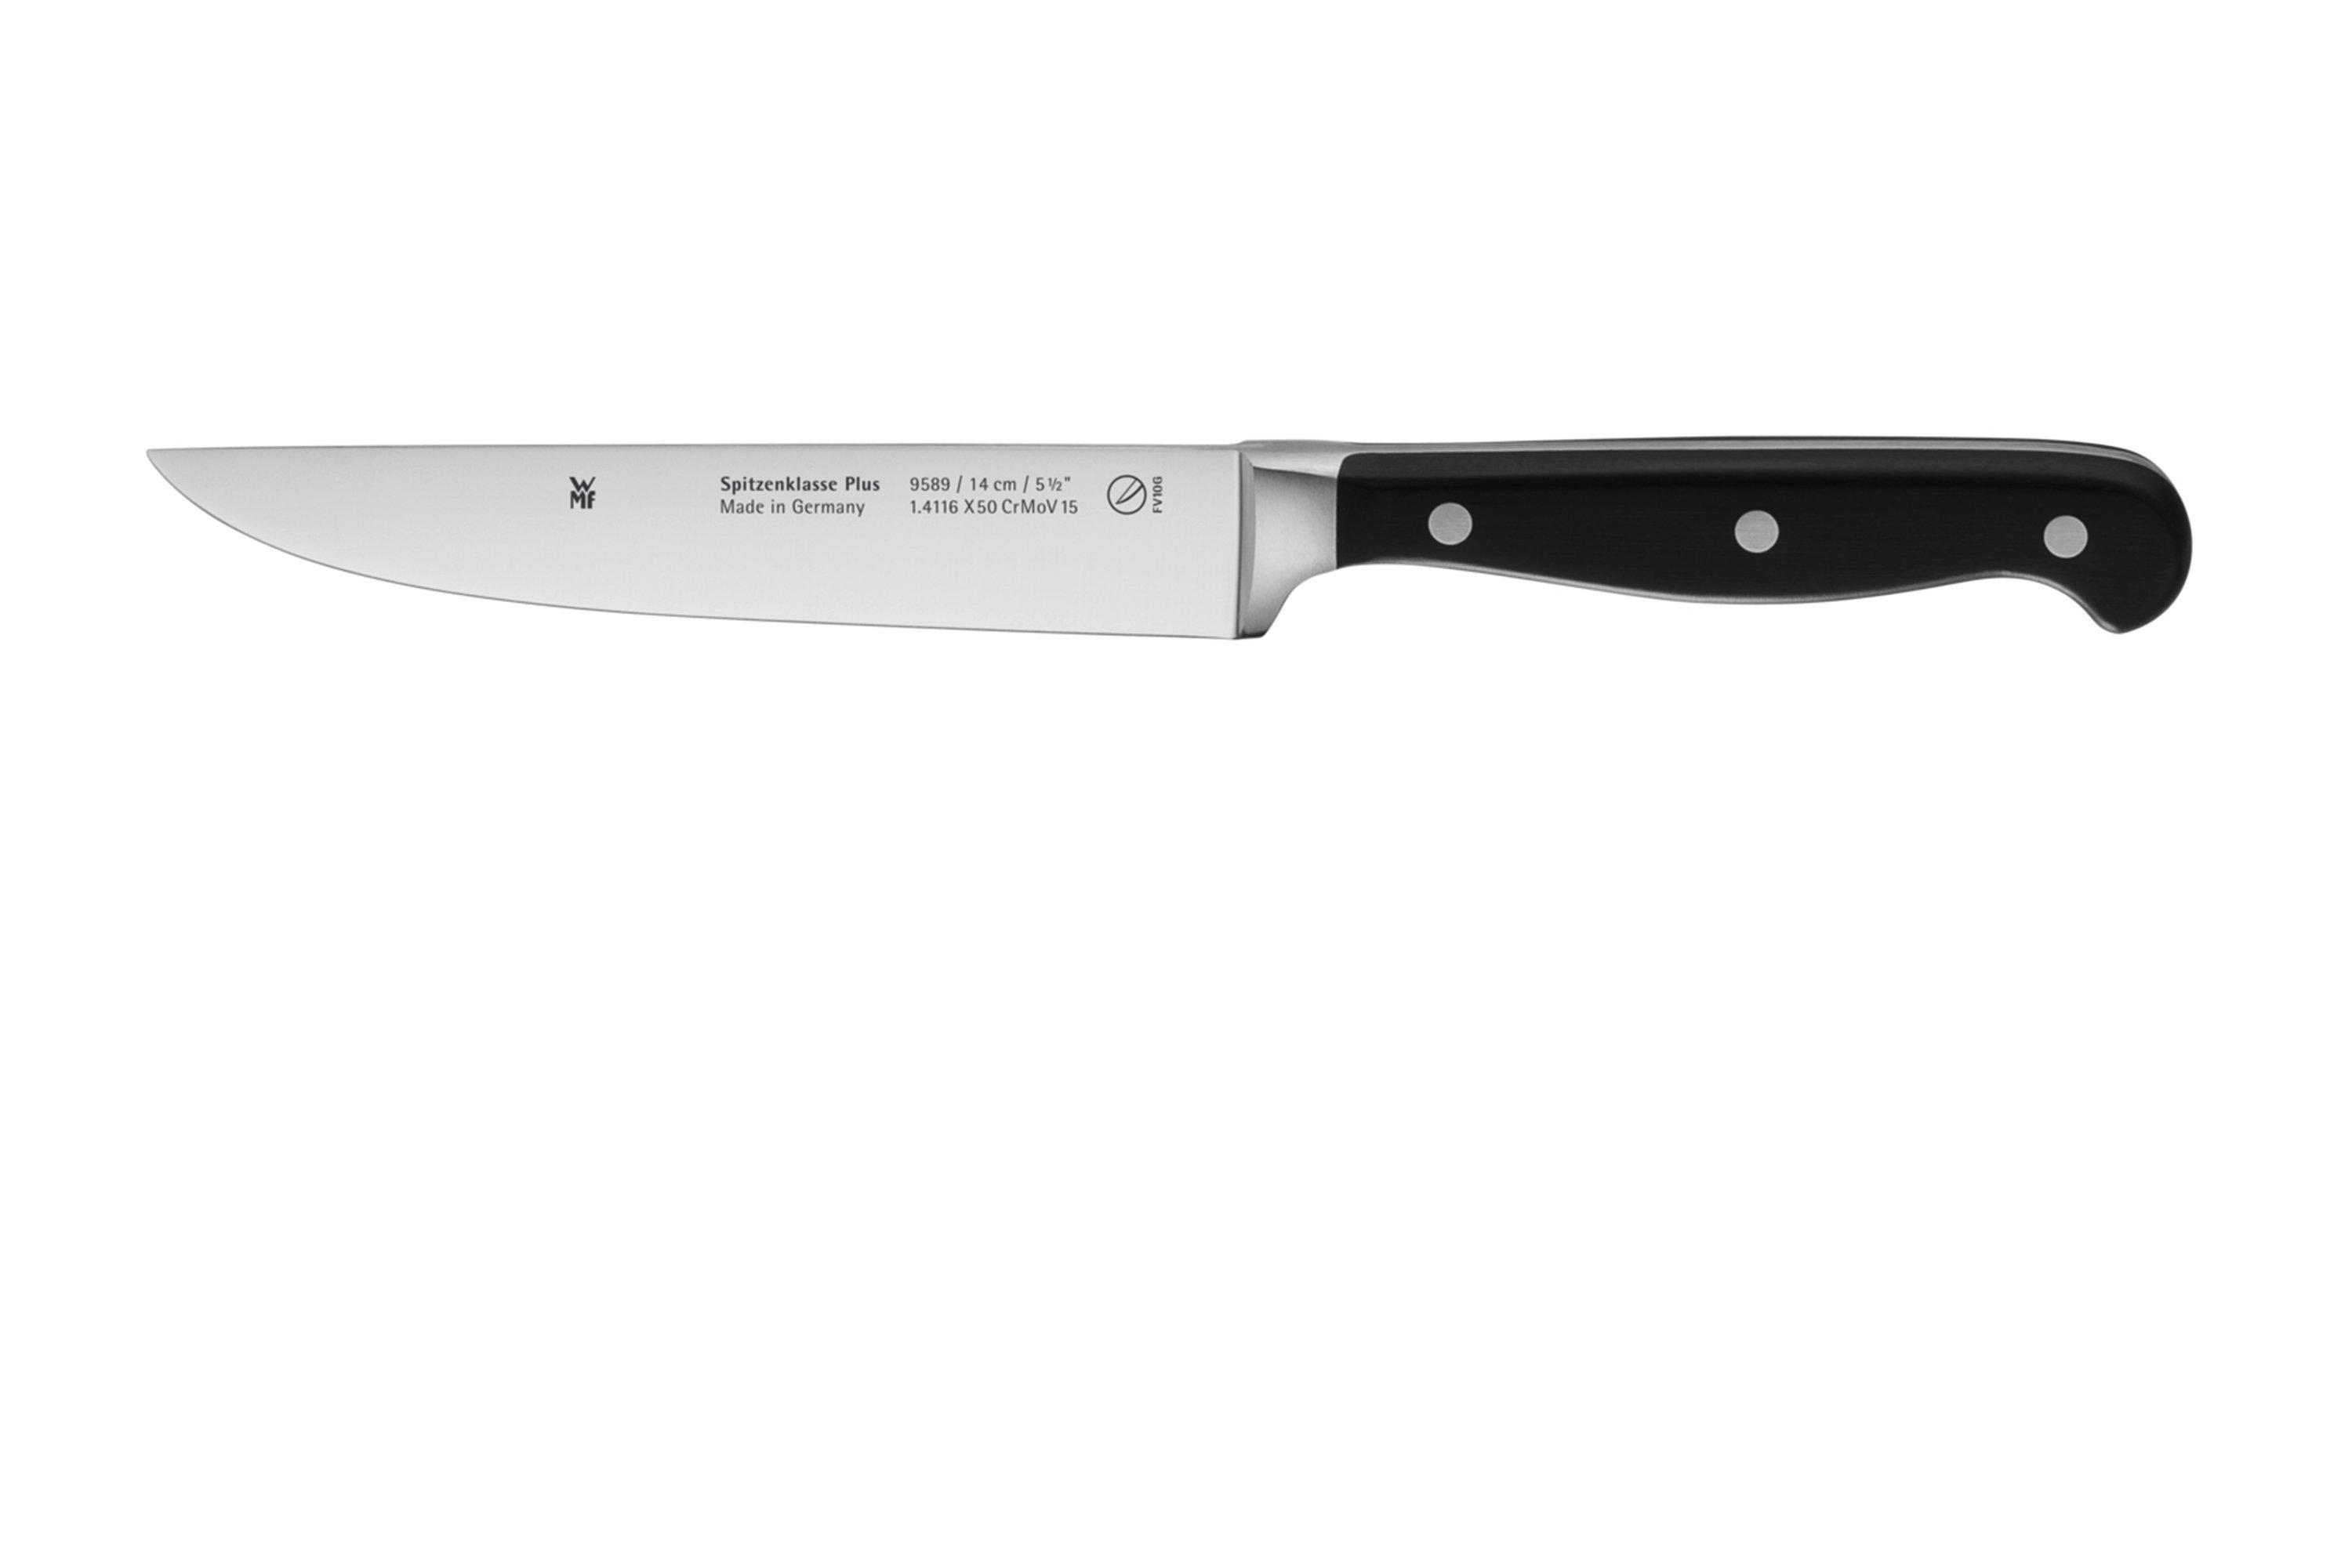 set Advantageously knife at 3-piece Spitzenklasse | WMF shopping Plus 1894919992,